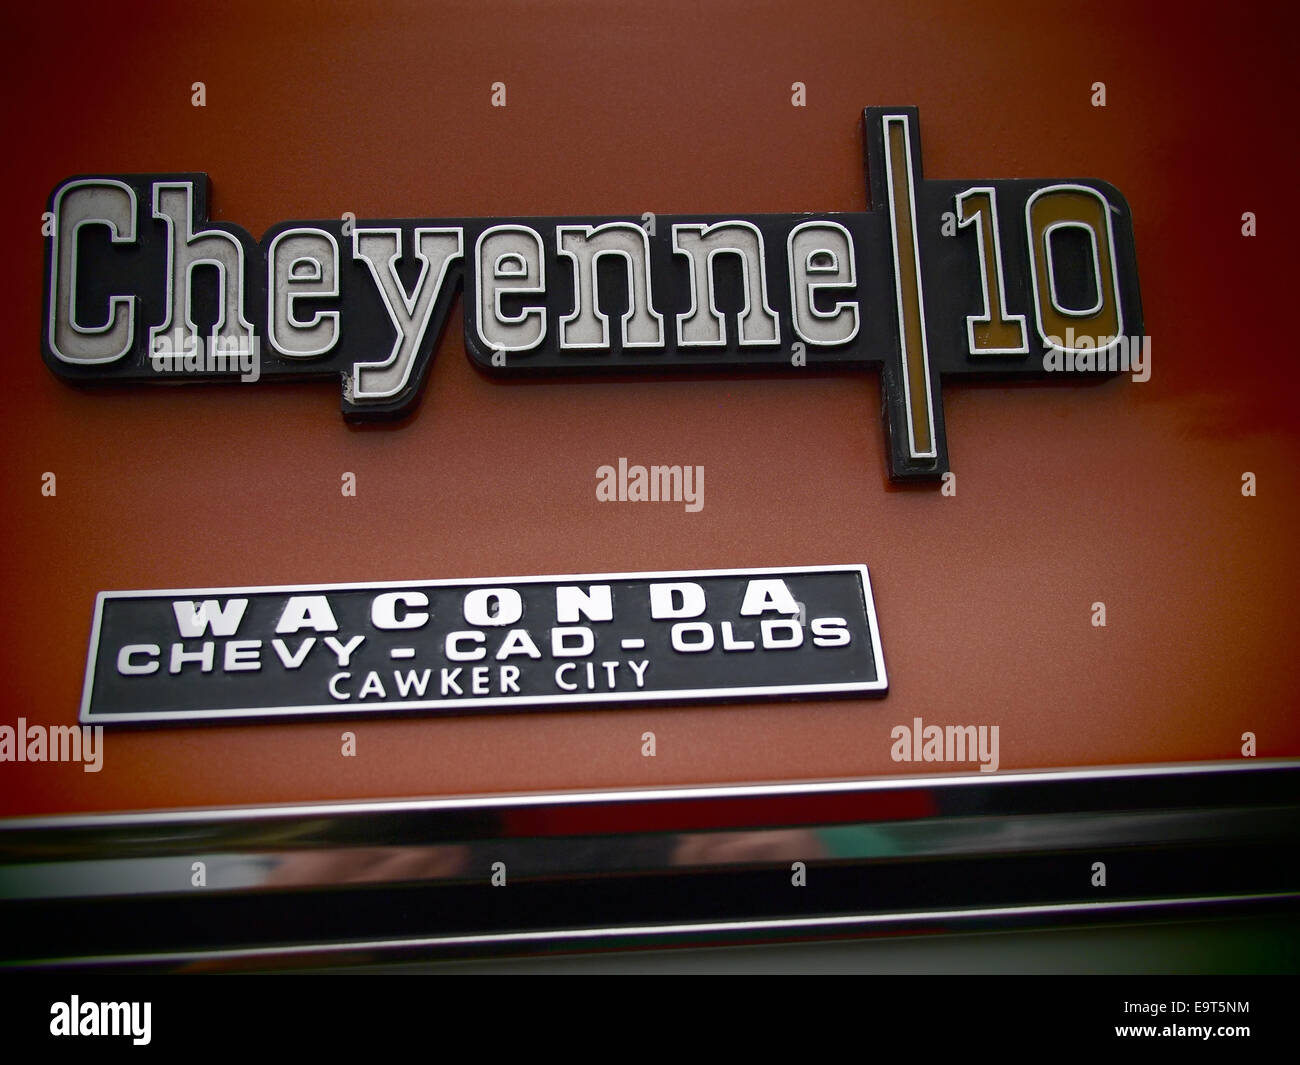 Cheyenne 10 Foto Stock